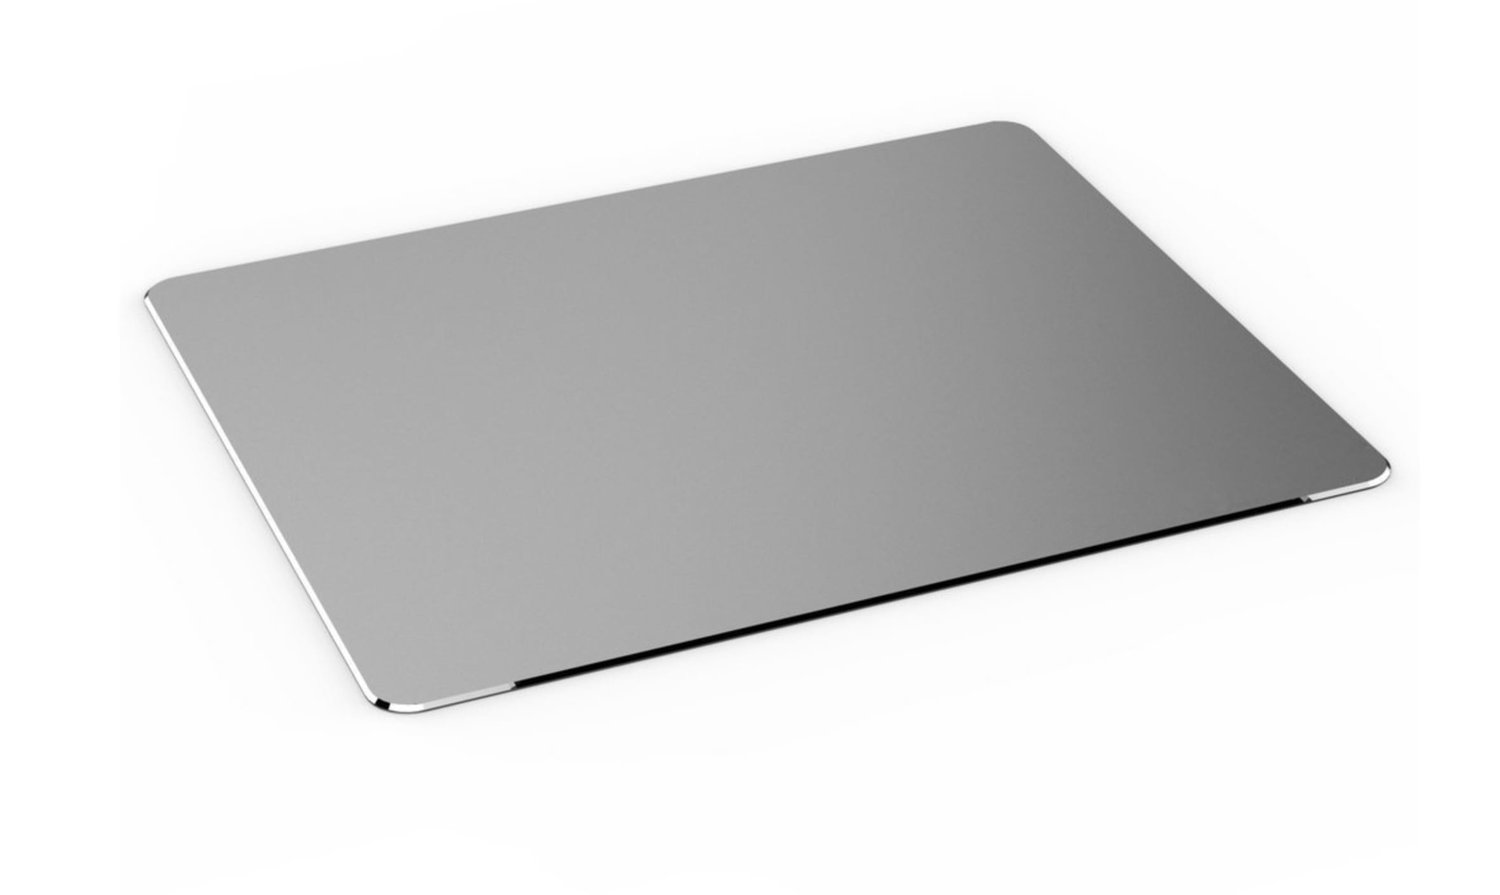 9. Mouse Pads -  Best MacBook Pro Accessories